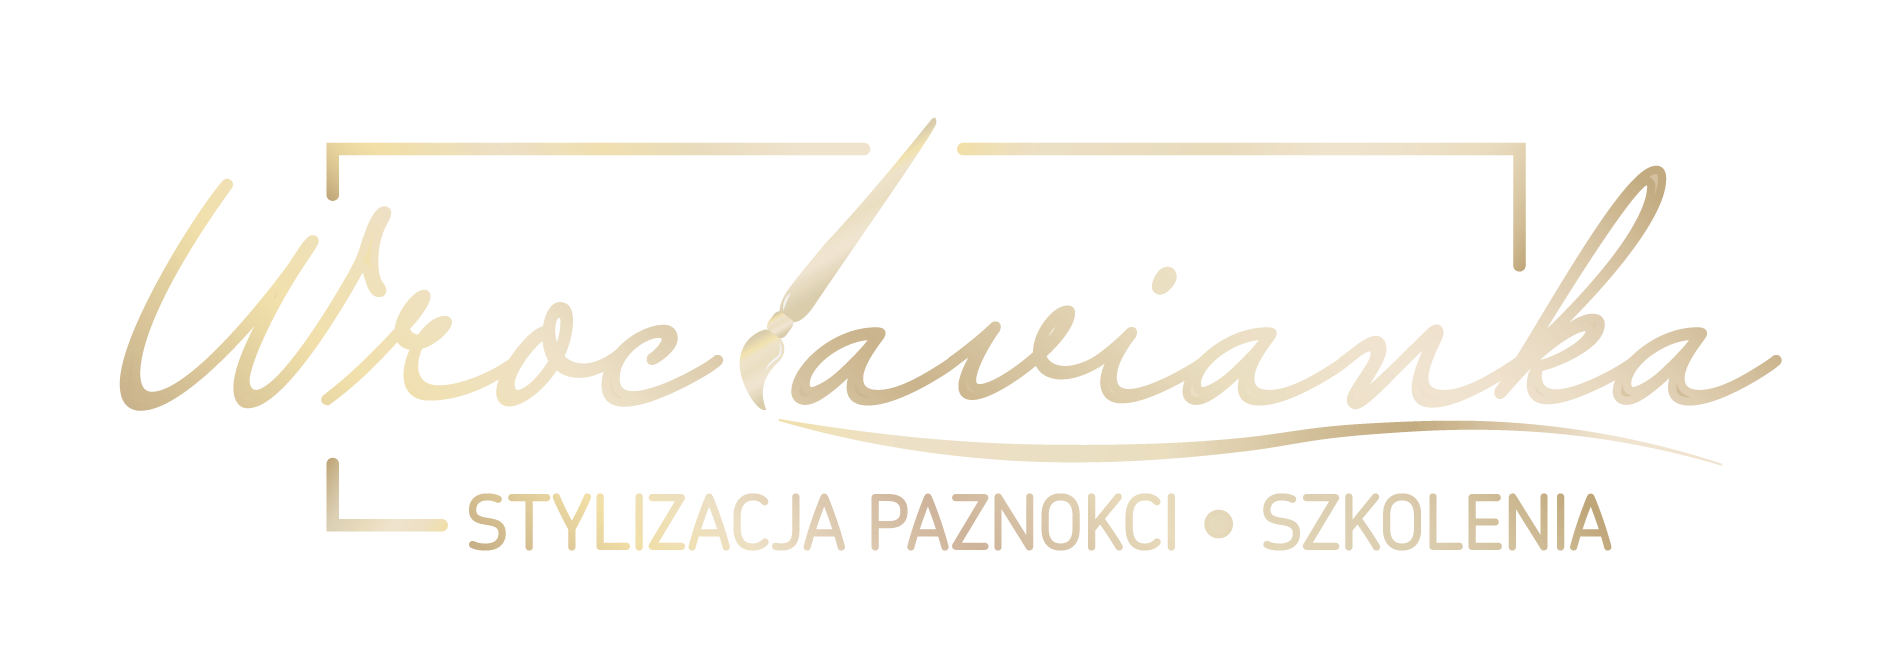 Wroclavianka